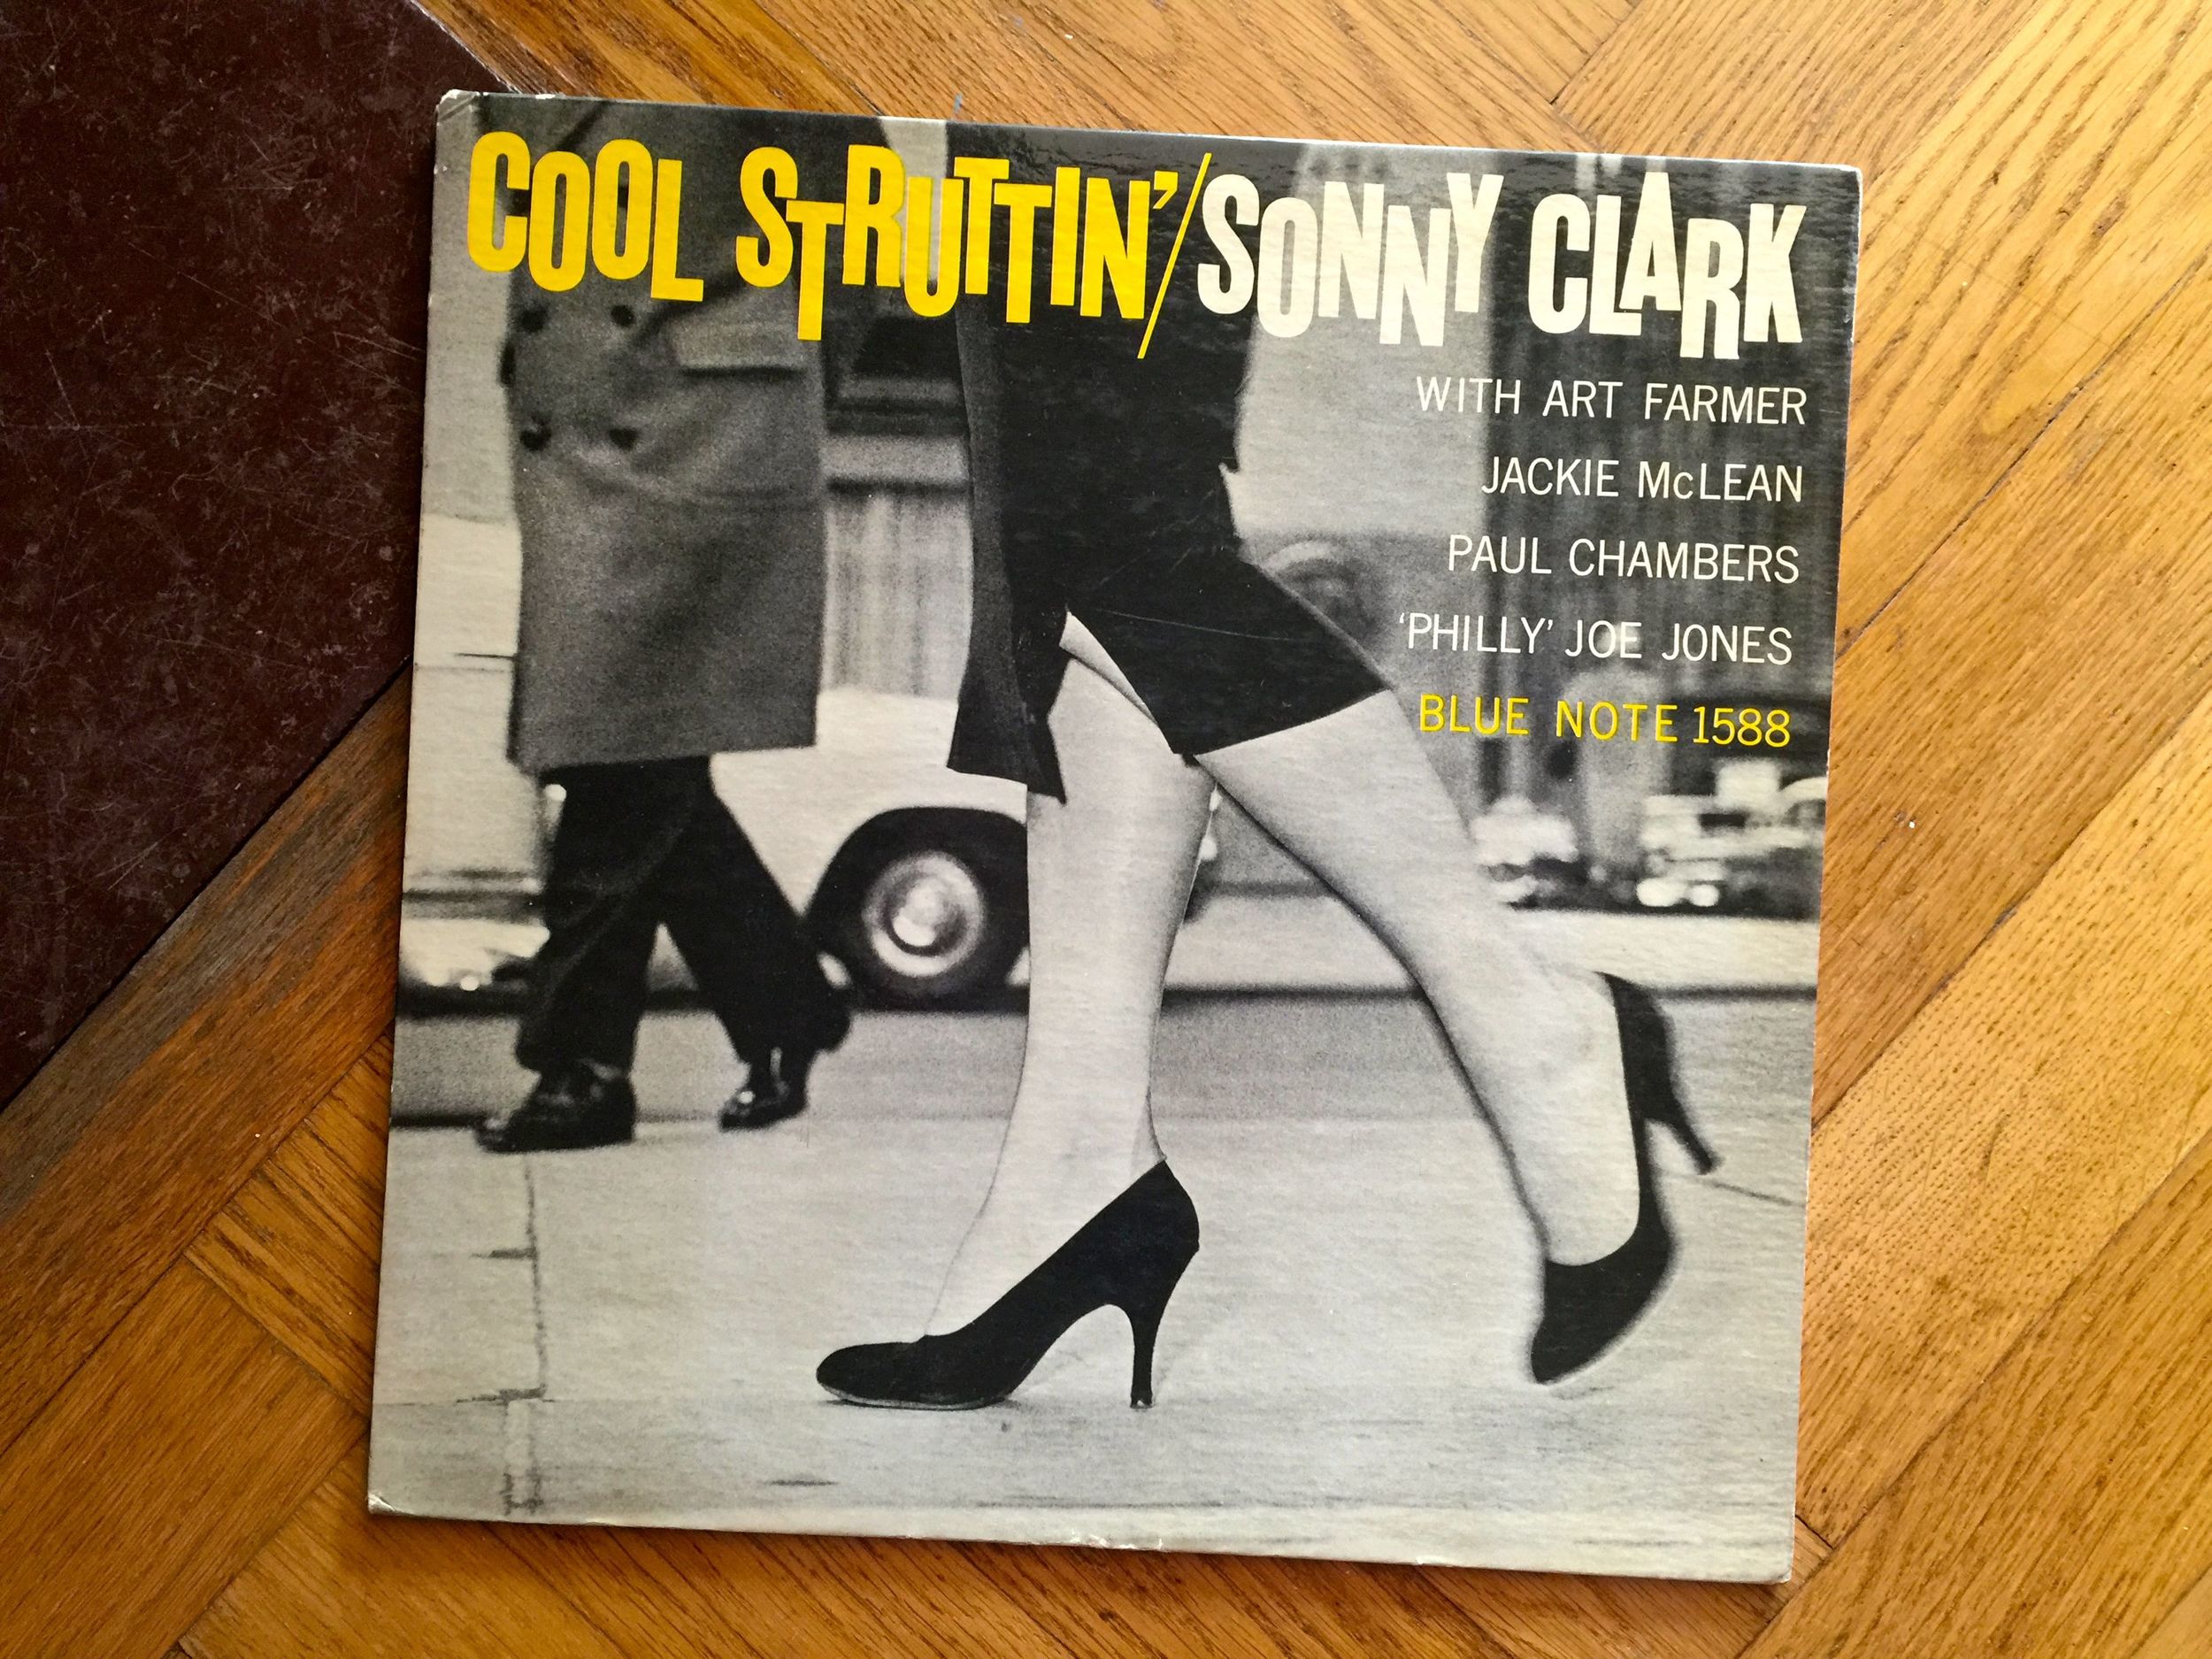 Sonny Clark "Cool Struttin" on Blue Note